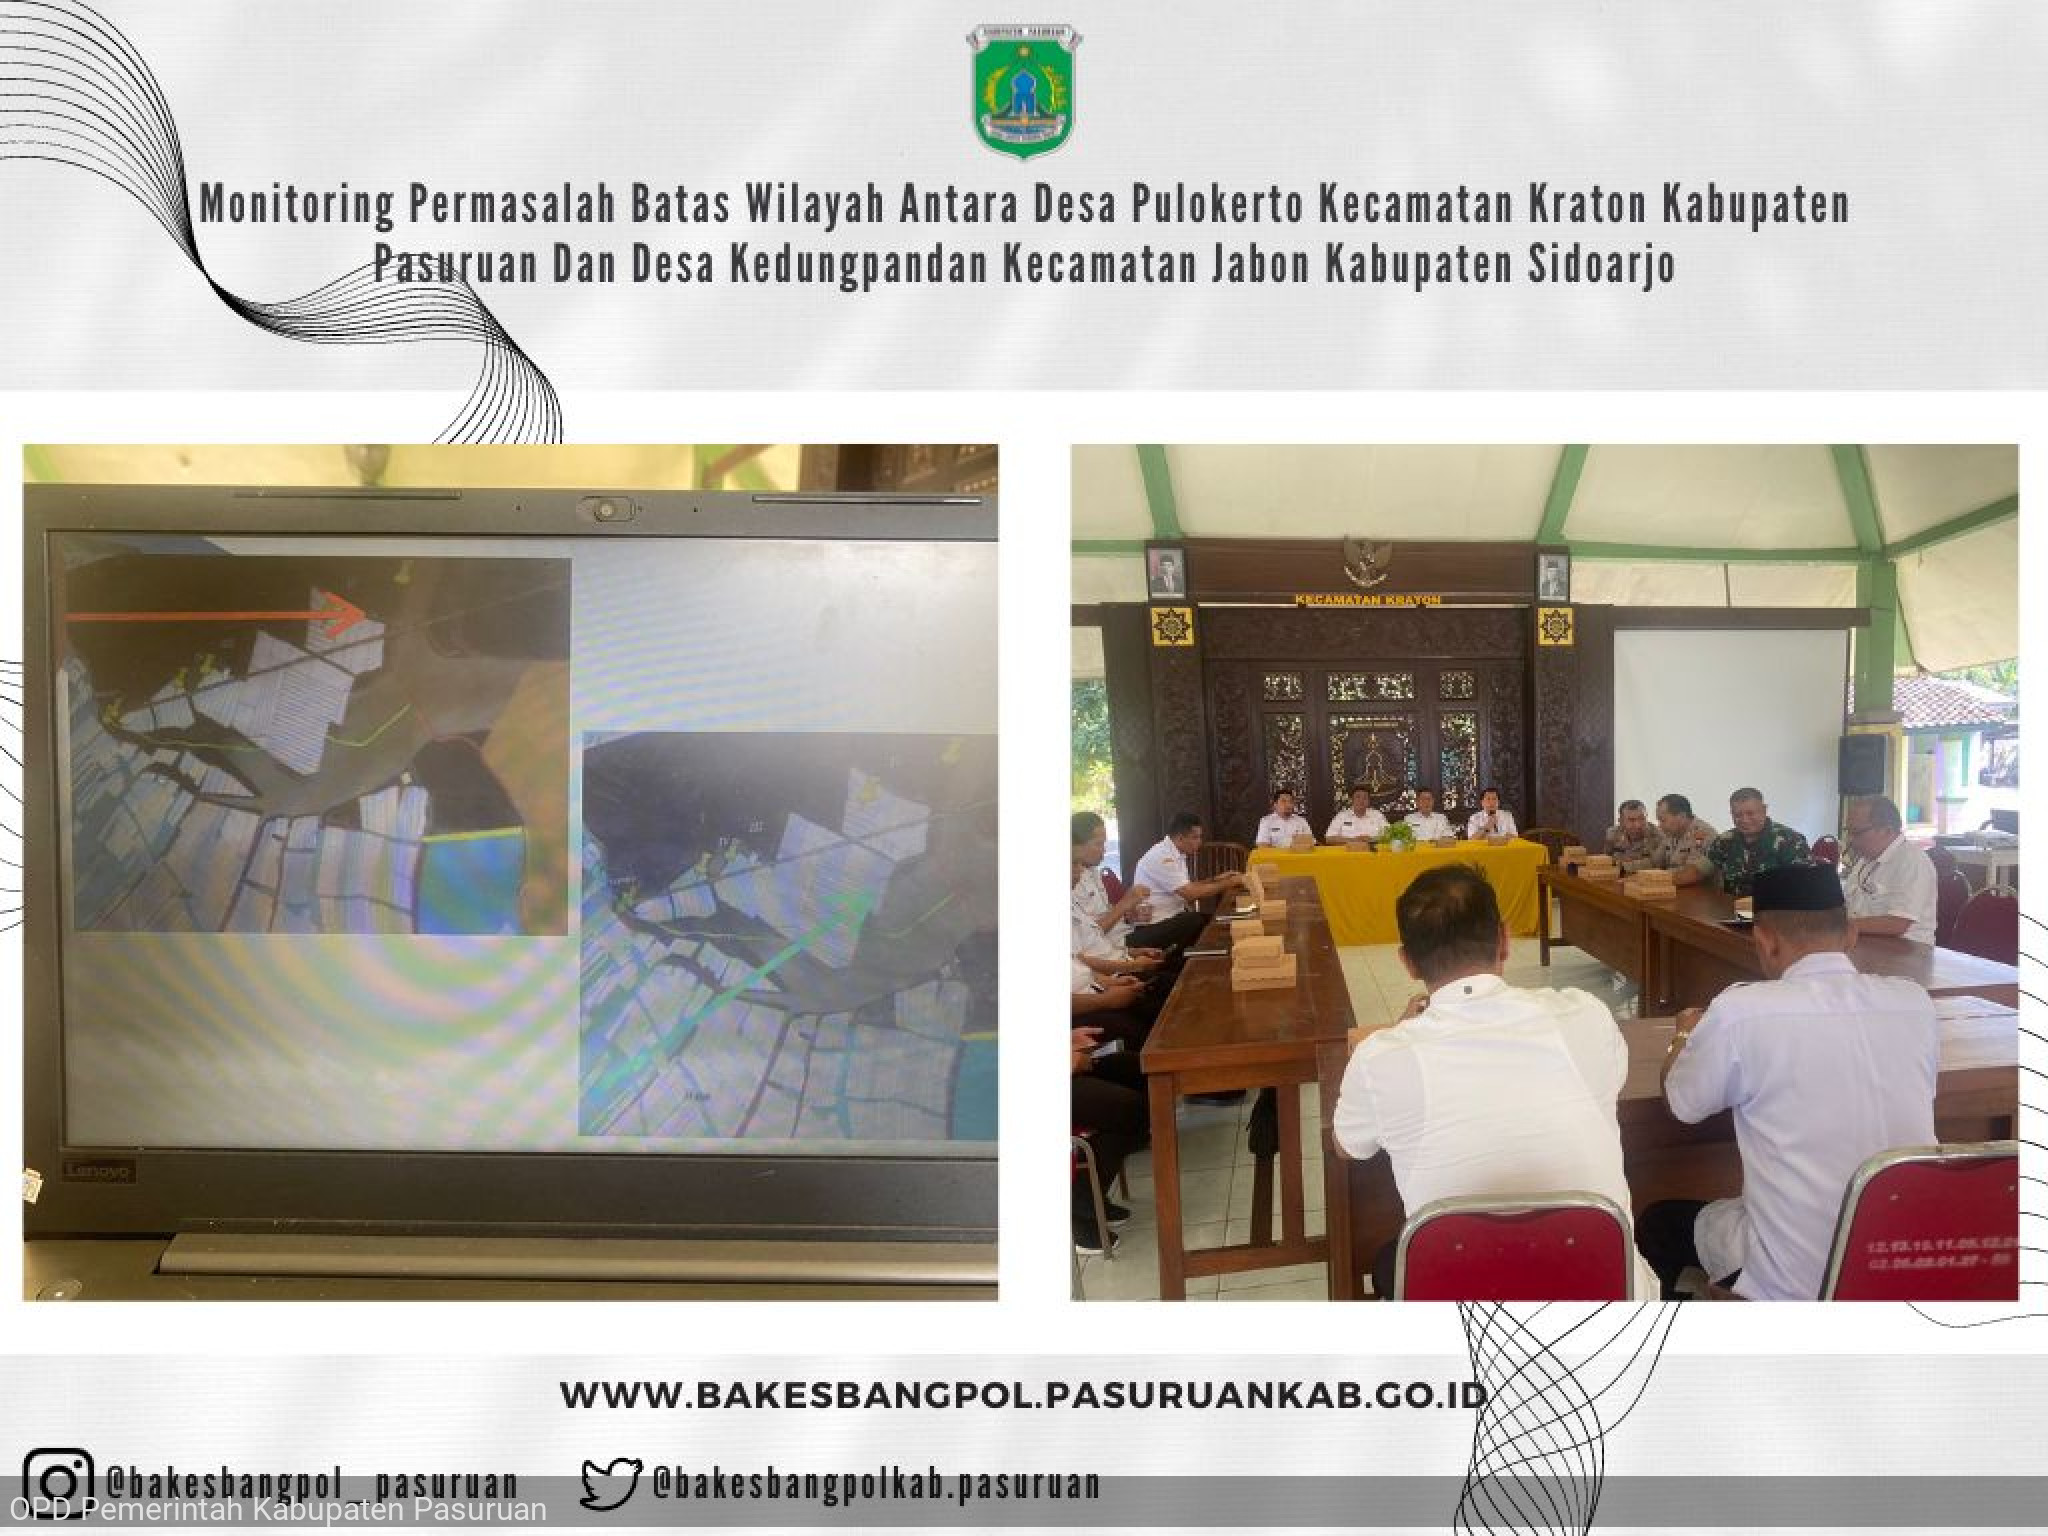 Monitoring Permasalah Batas Wilayah Antara Desa Pulokerto Kecamatan Kraton Kabupaten Pasuruan Dan Desa Kedungpandan Kecamatan Jabon Kabupaten Sidoarjo